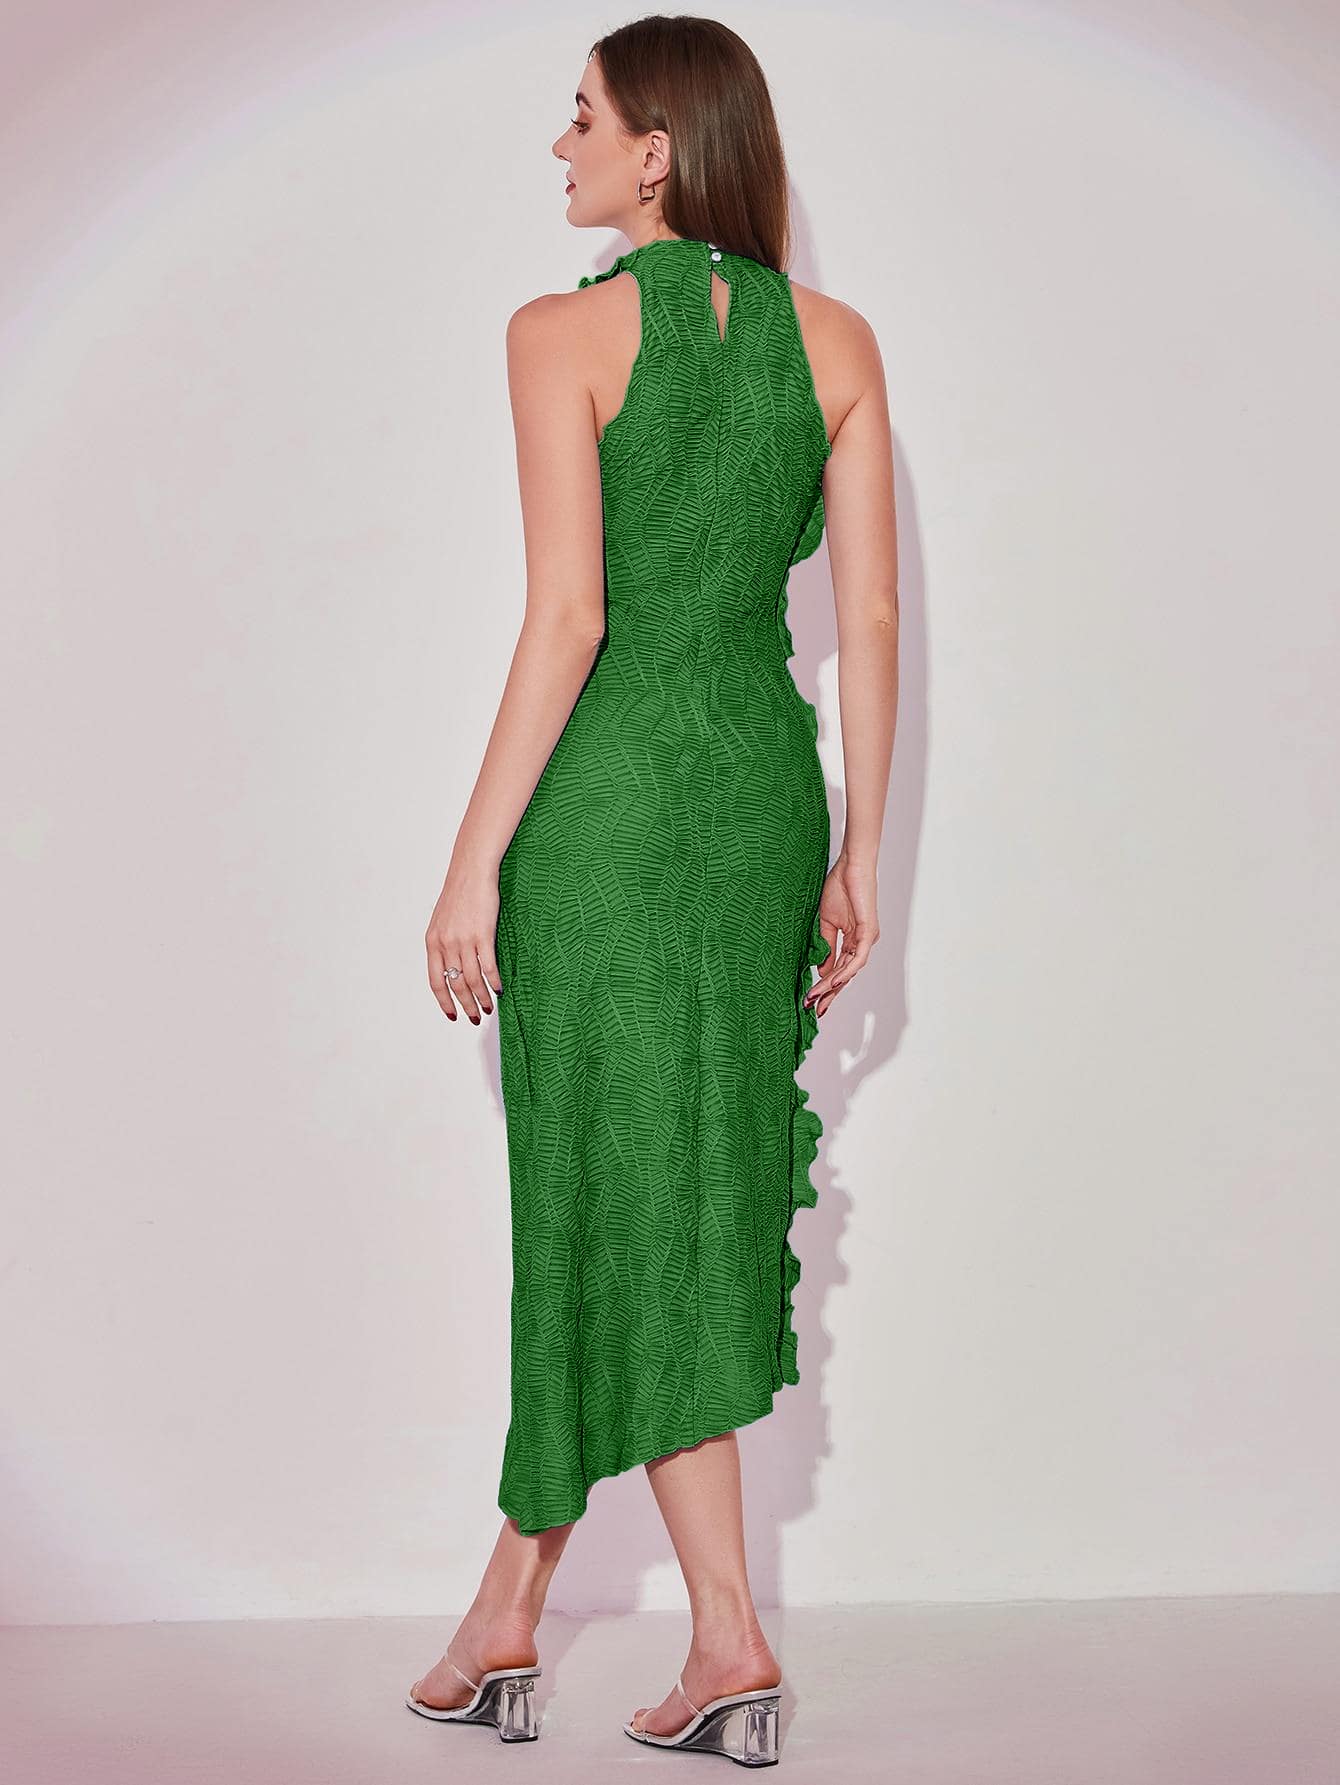 Lettuce Trim Textured Dress